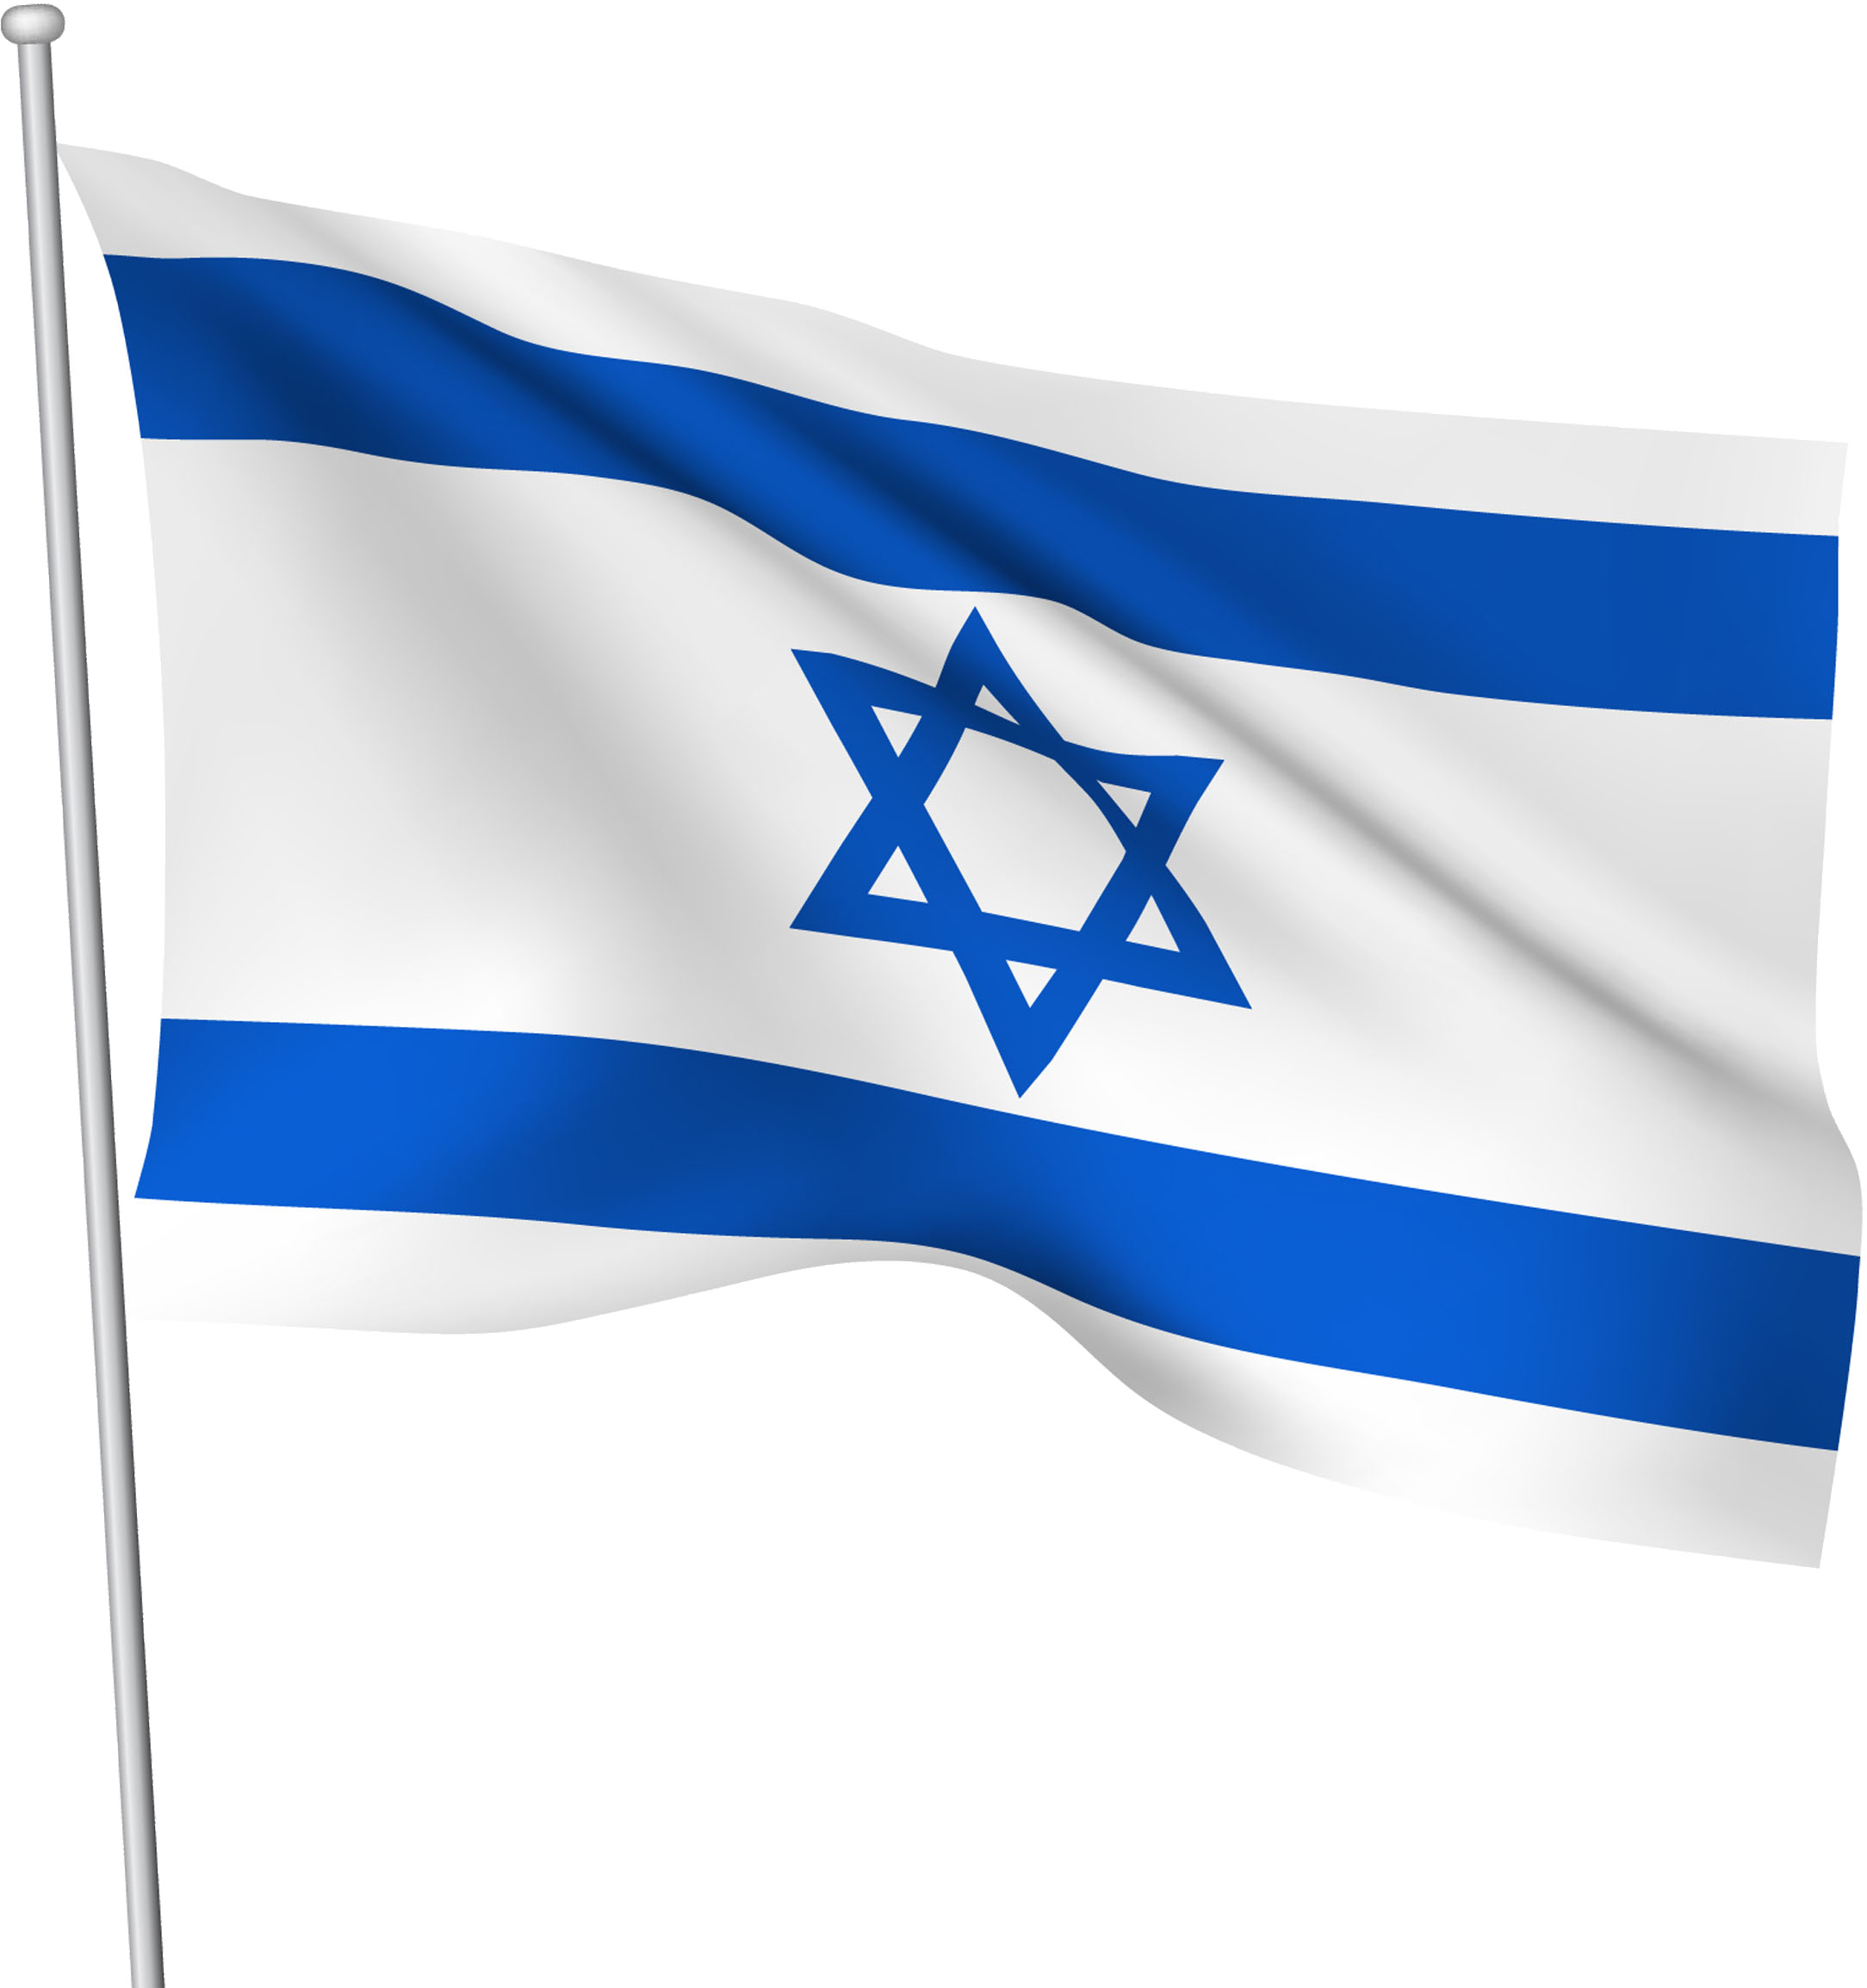 Israel Flag PNG Image for Free Download